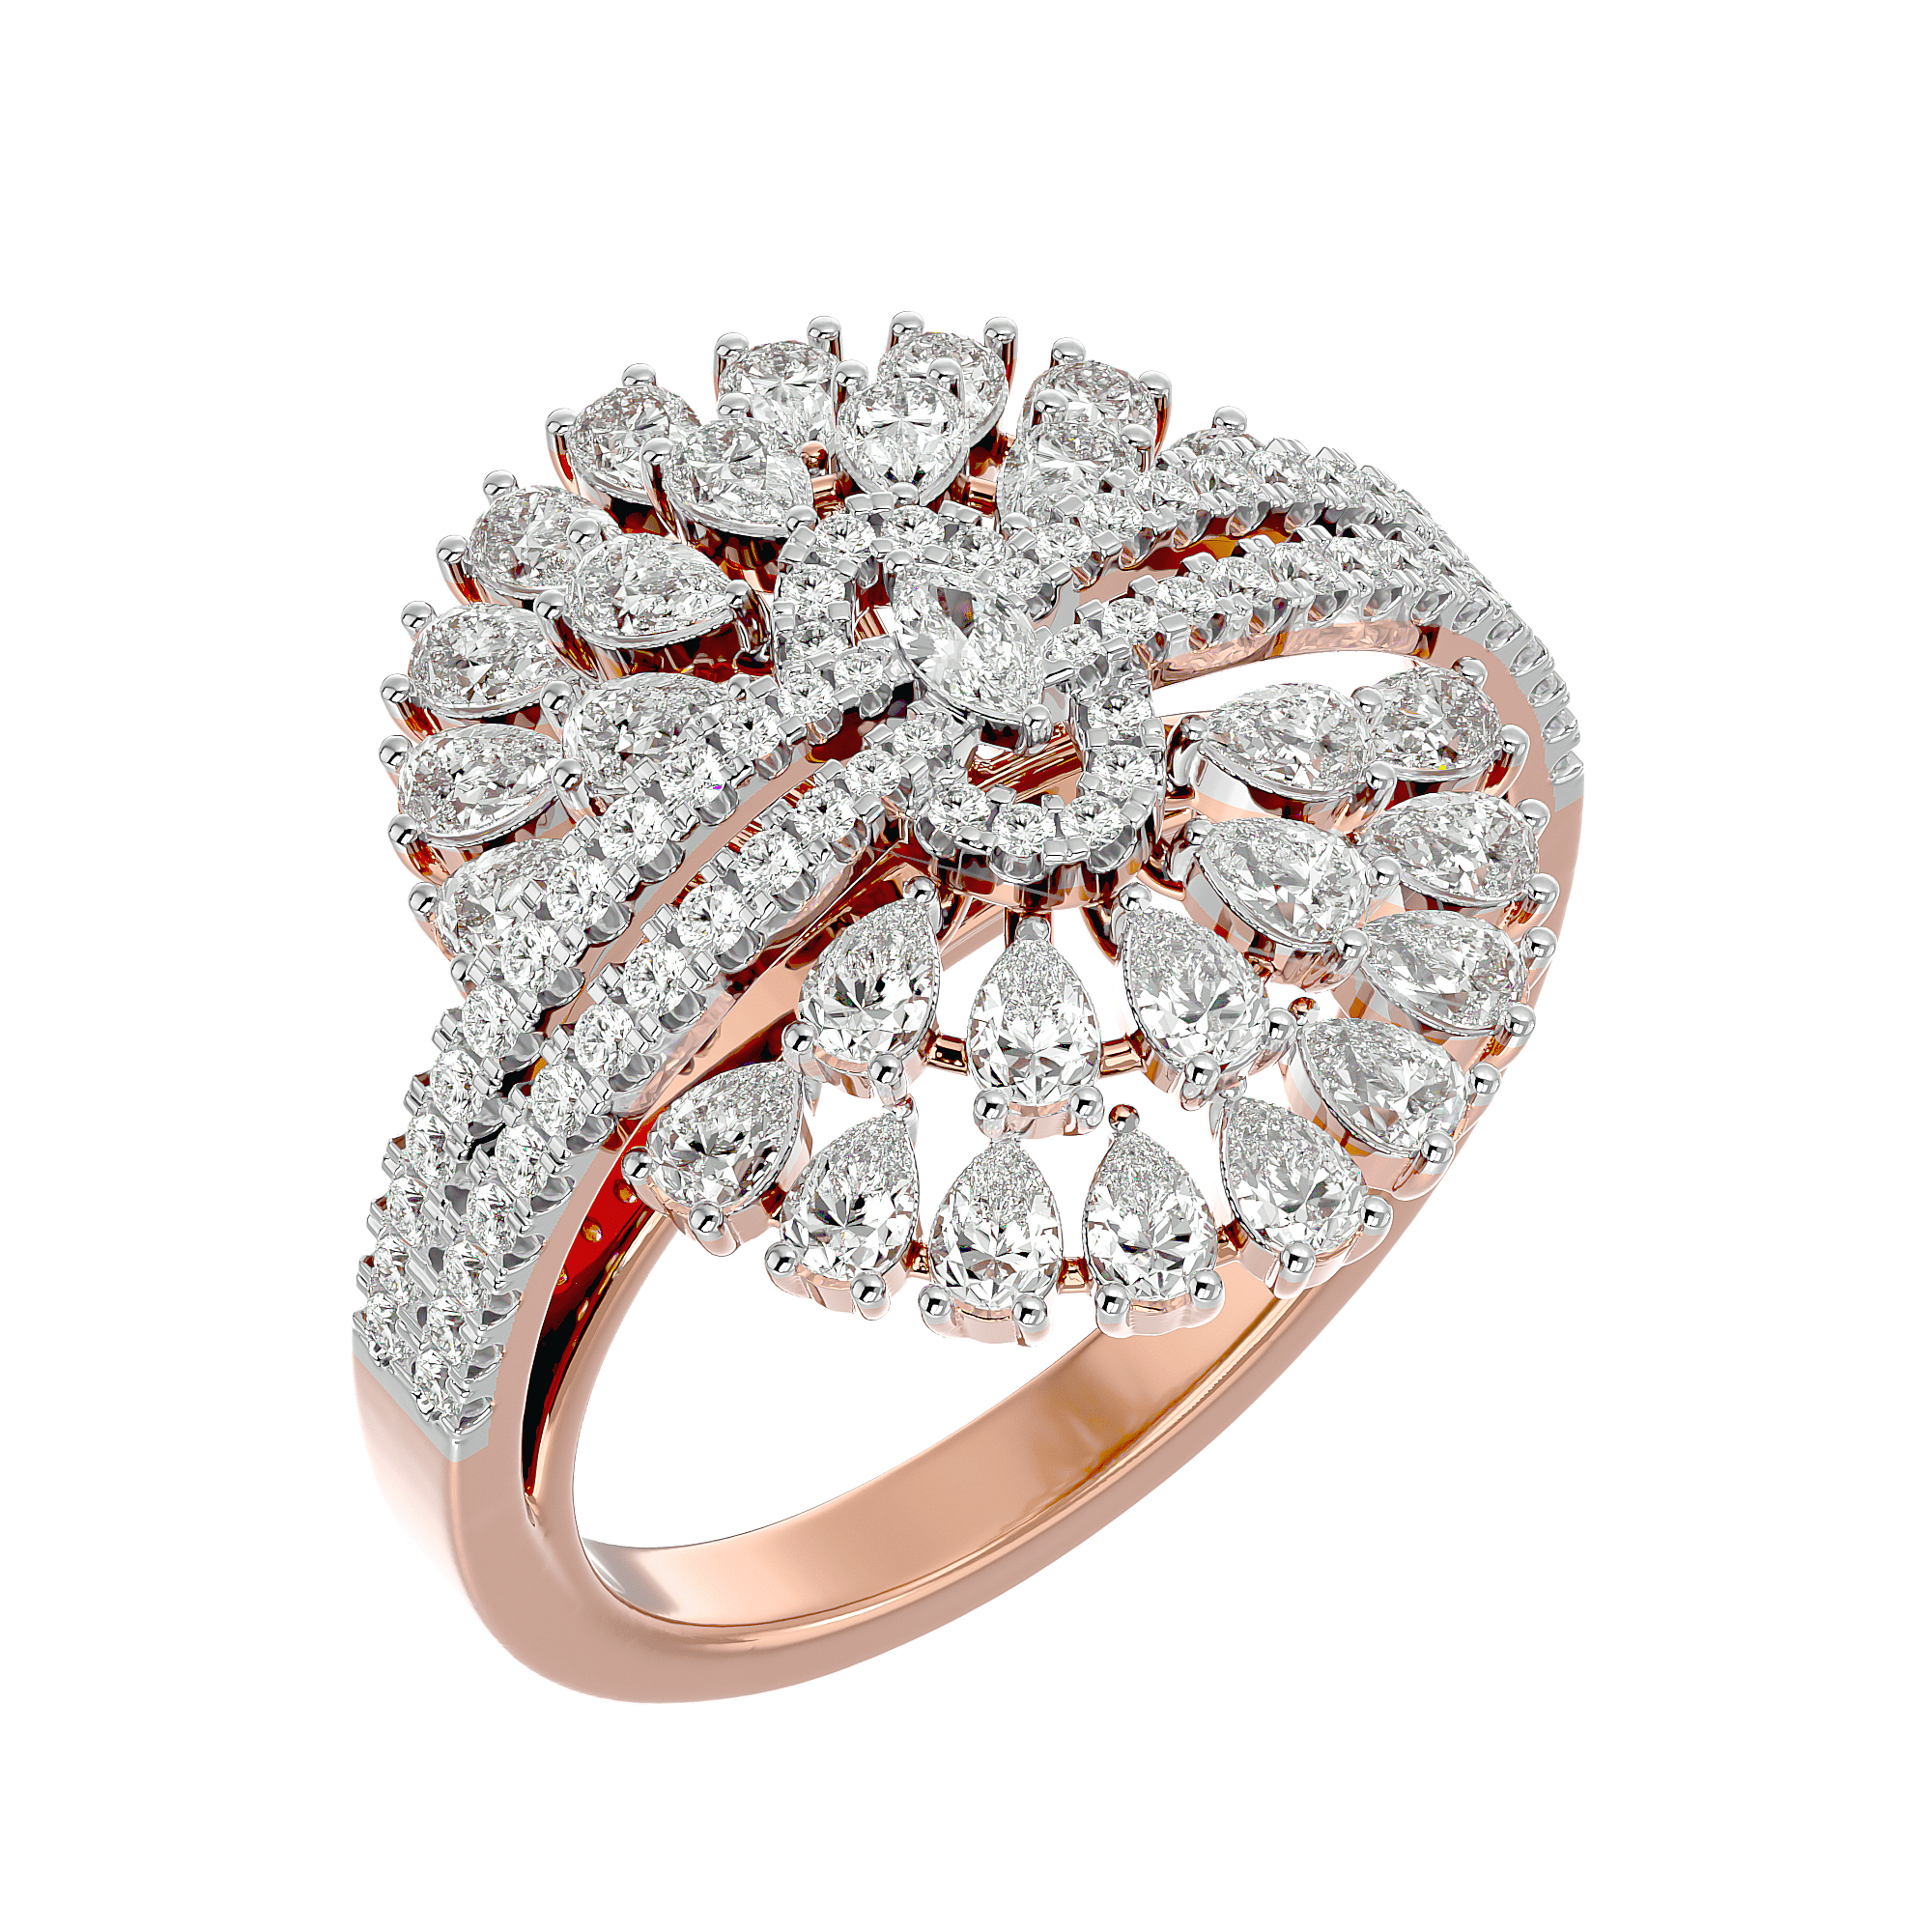 14K White Gold White Yellow Diamond Cocktail Ring for Women Floral Design  1.25ct 802988